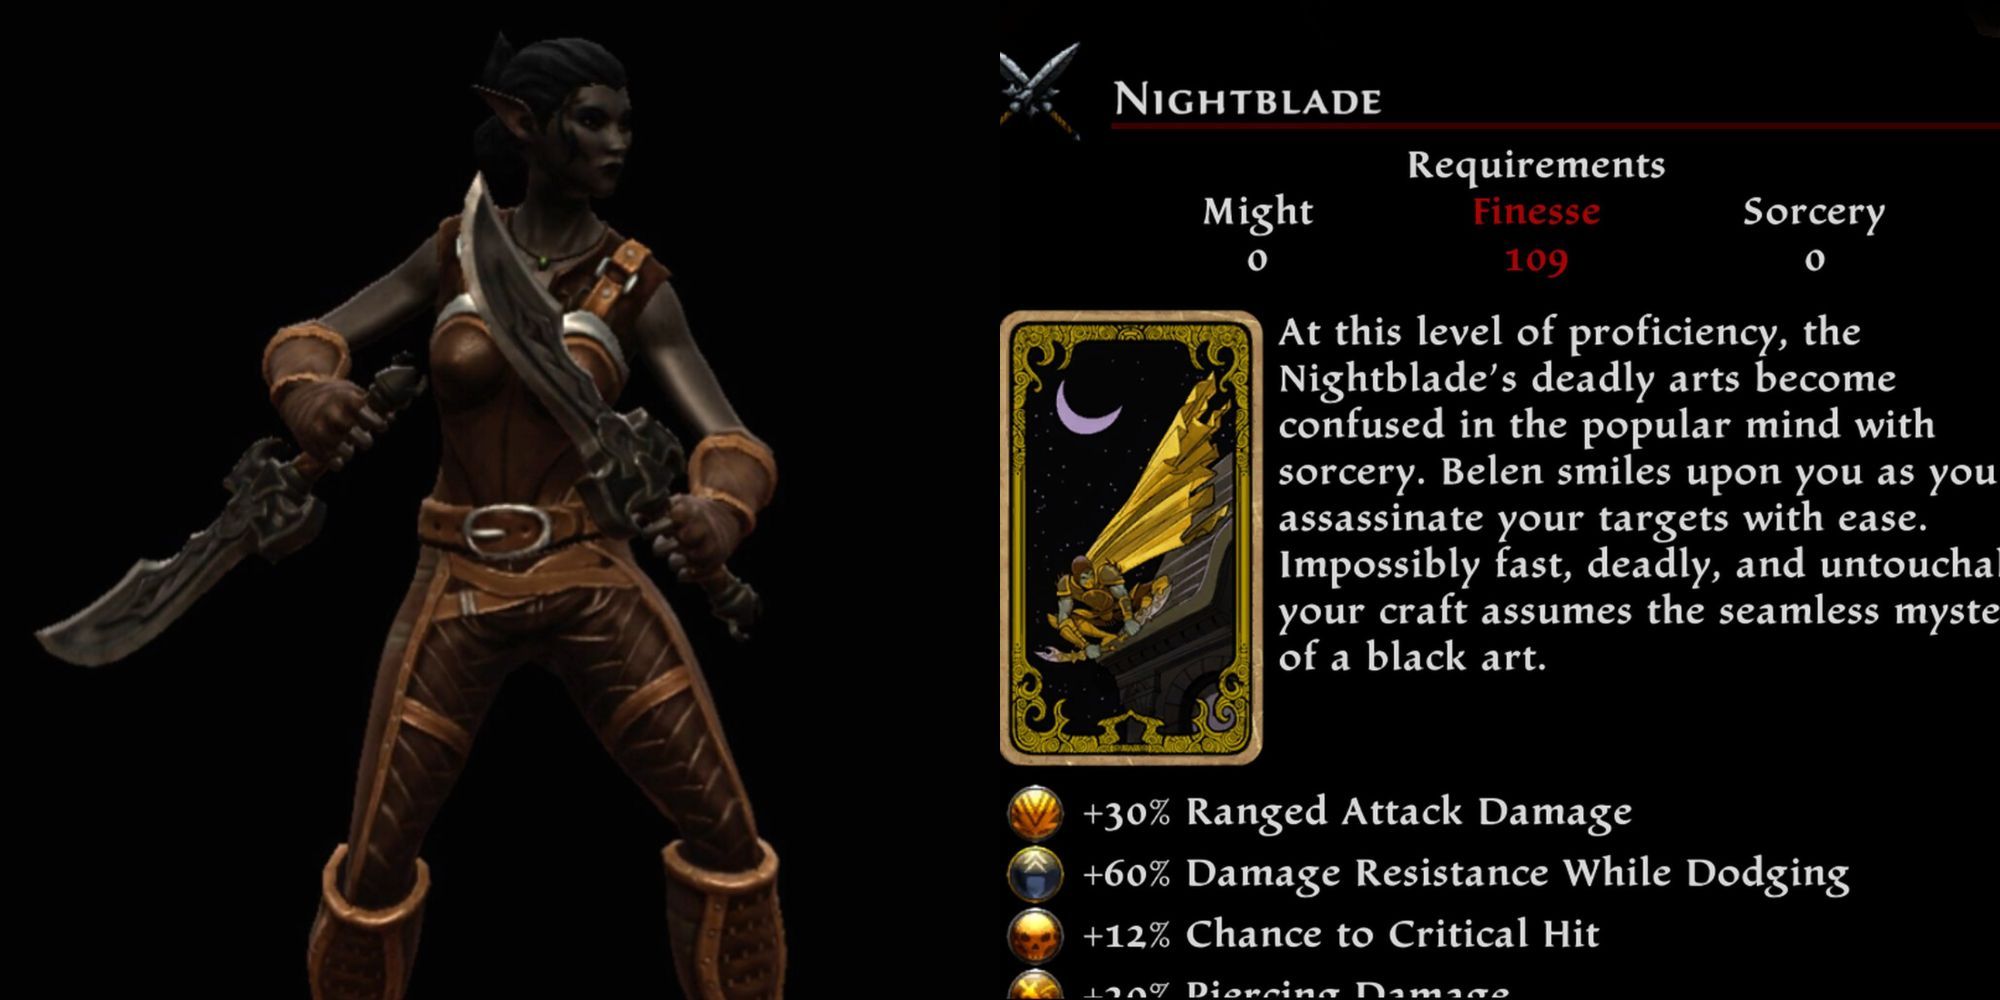 Kingdoms of Amalur nightblade. Protagonist holding dual blades, nightblade screen.